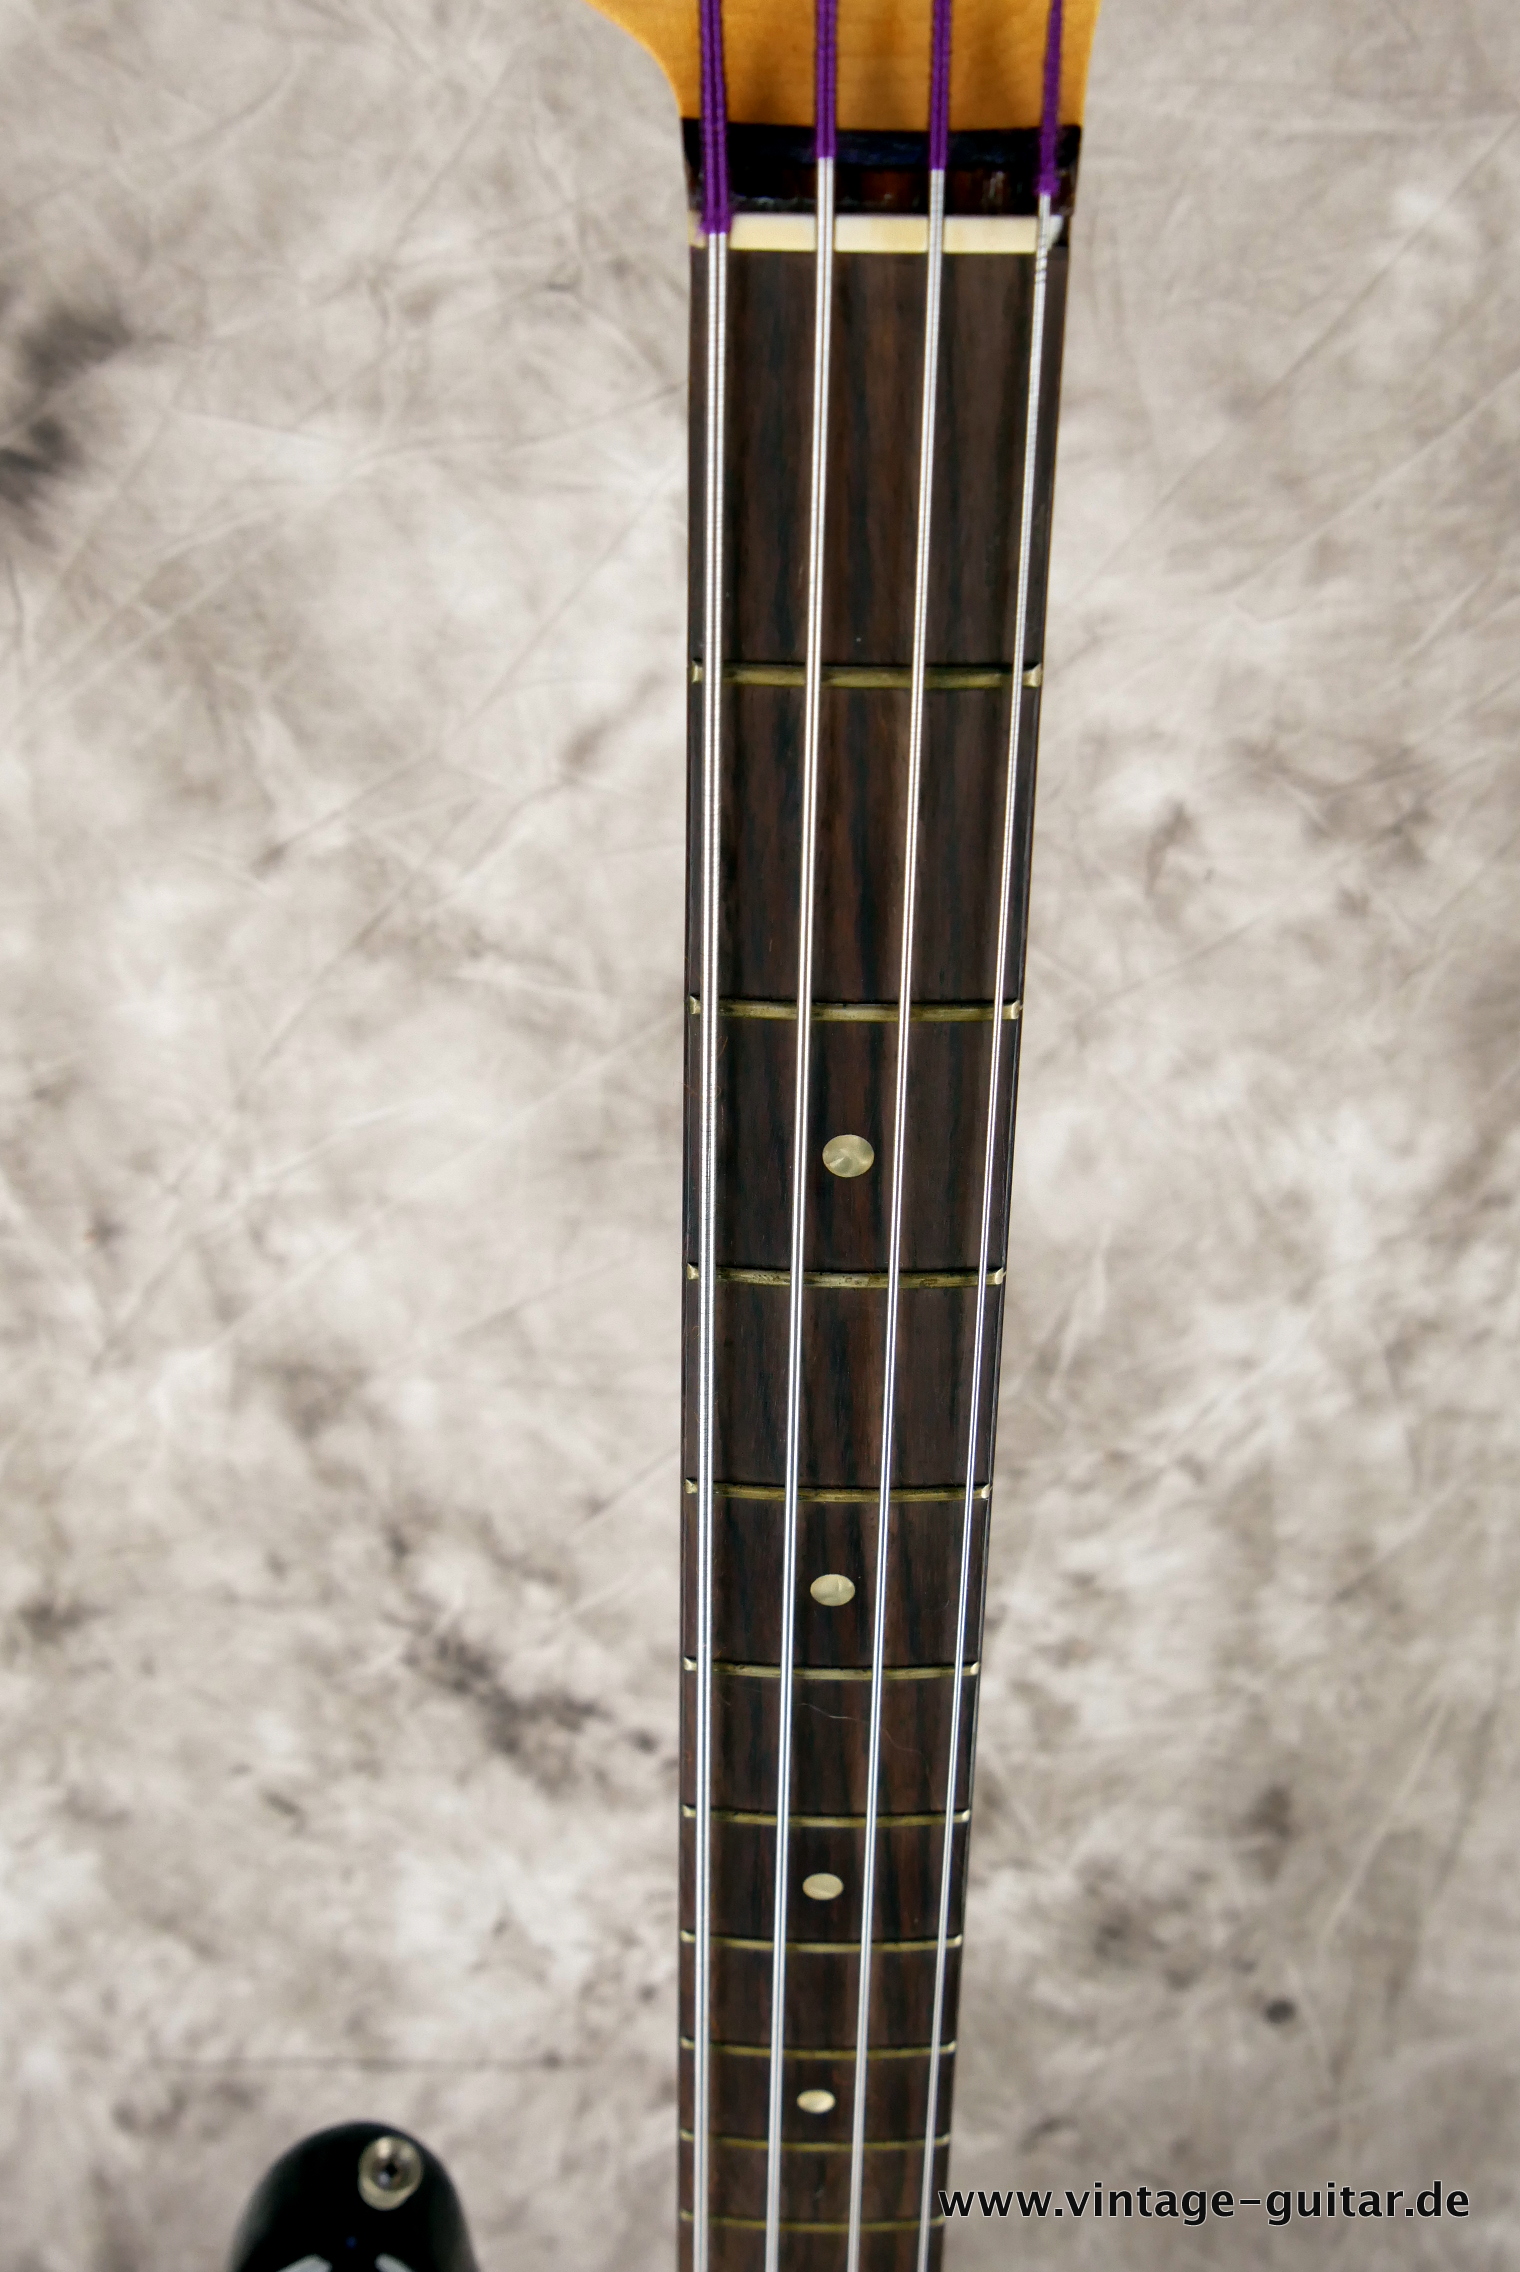 Fender-Precision-Bass-1965-sunburst-mint-condition-011.JPG